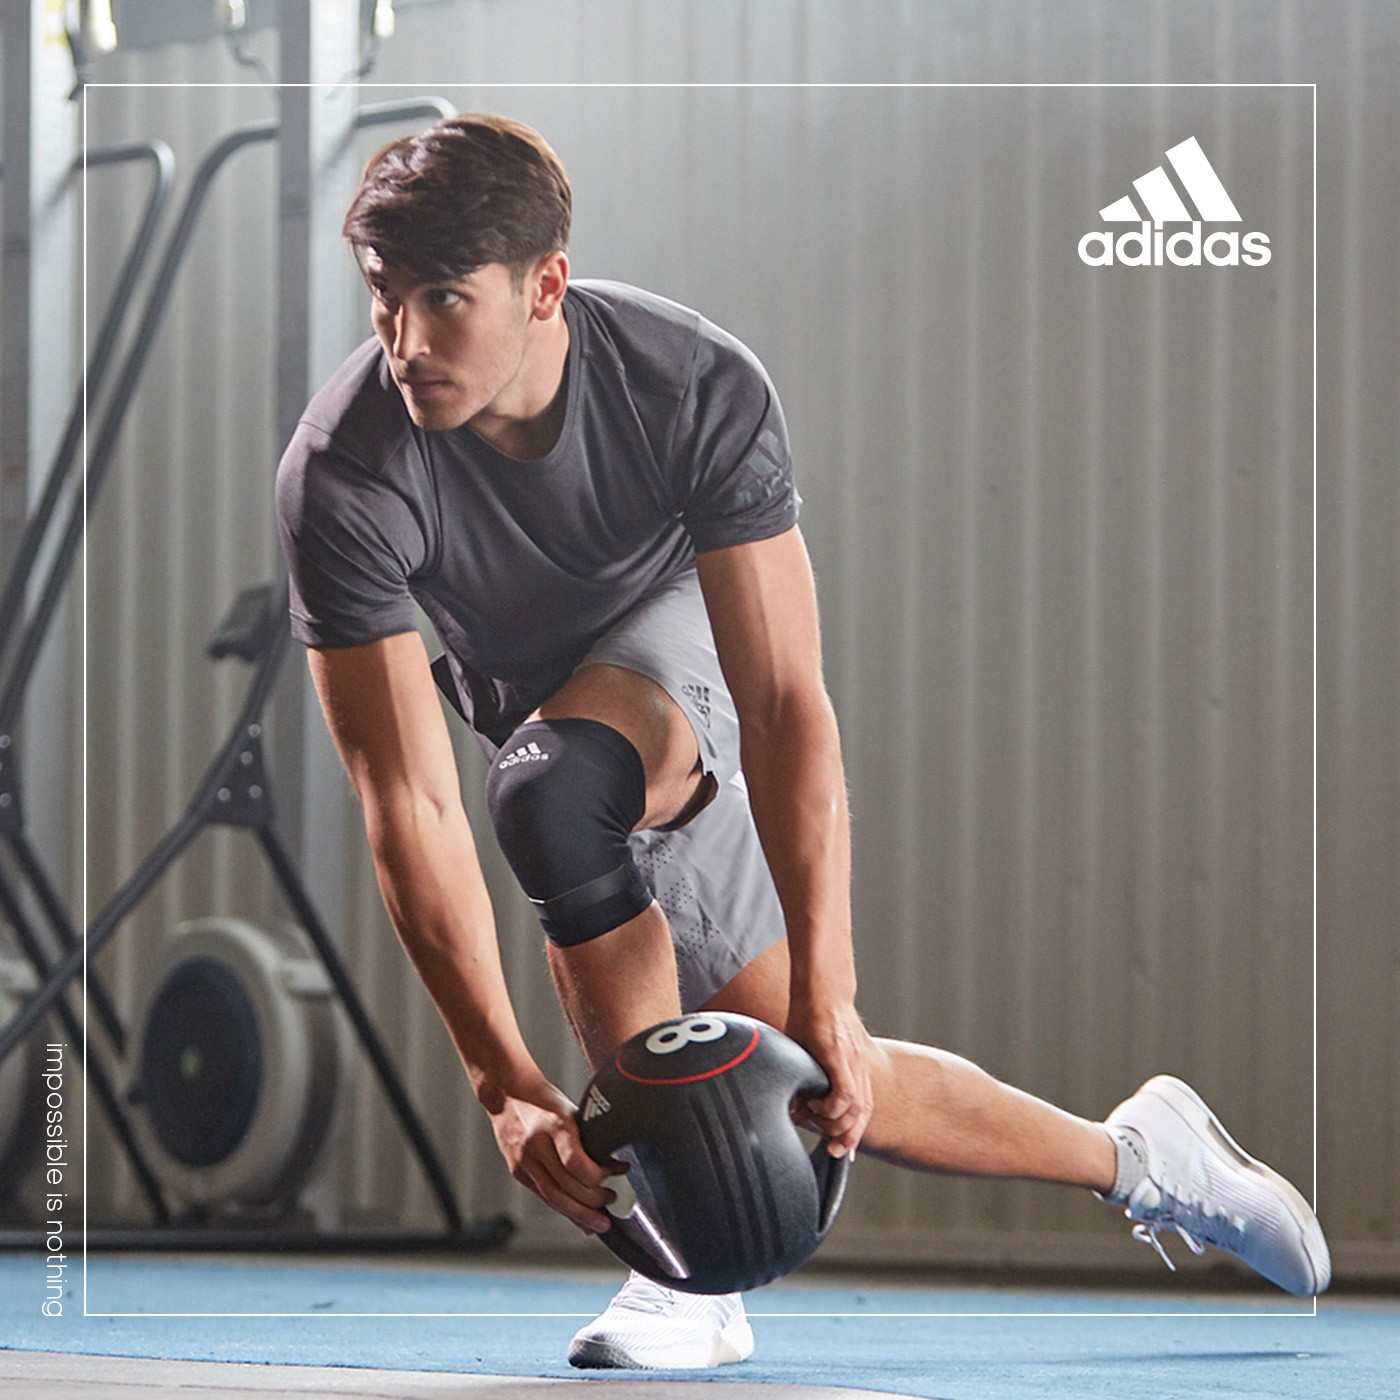 Adidas 彈力纏繞式訓練護帶完整保護肘/膝關節